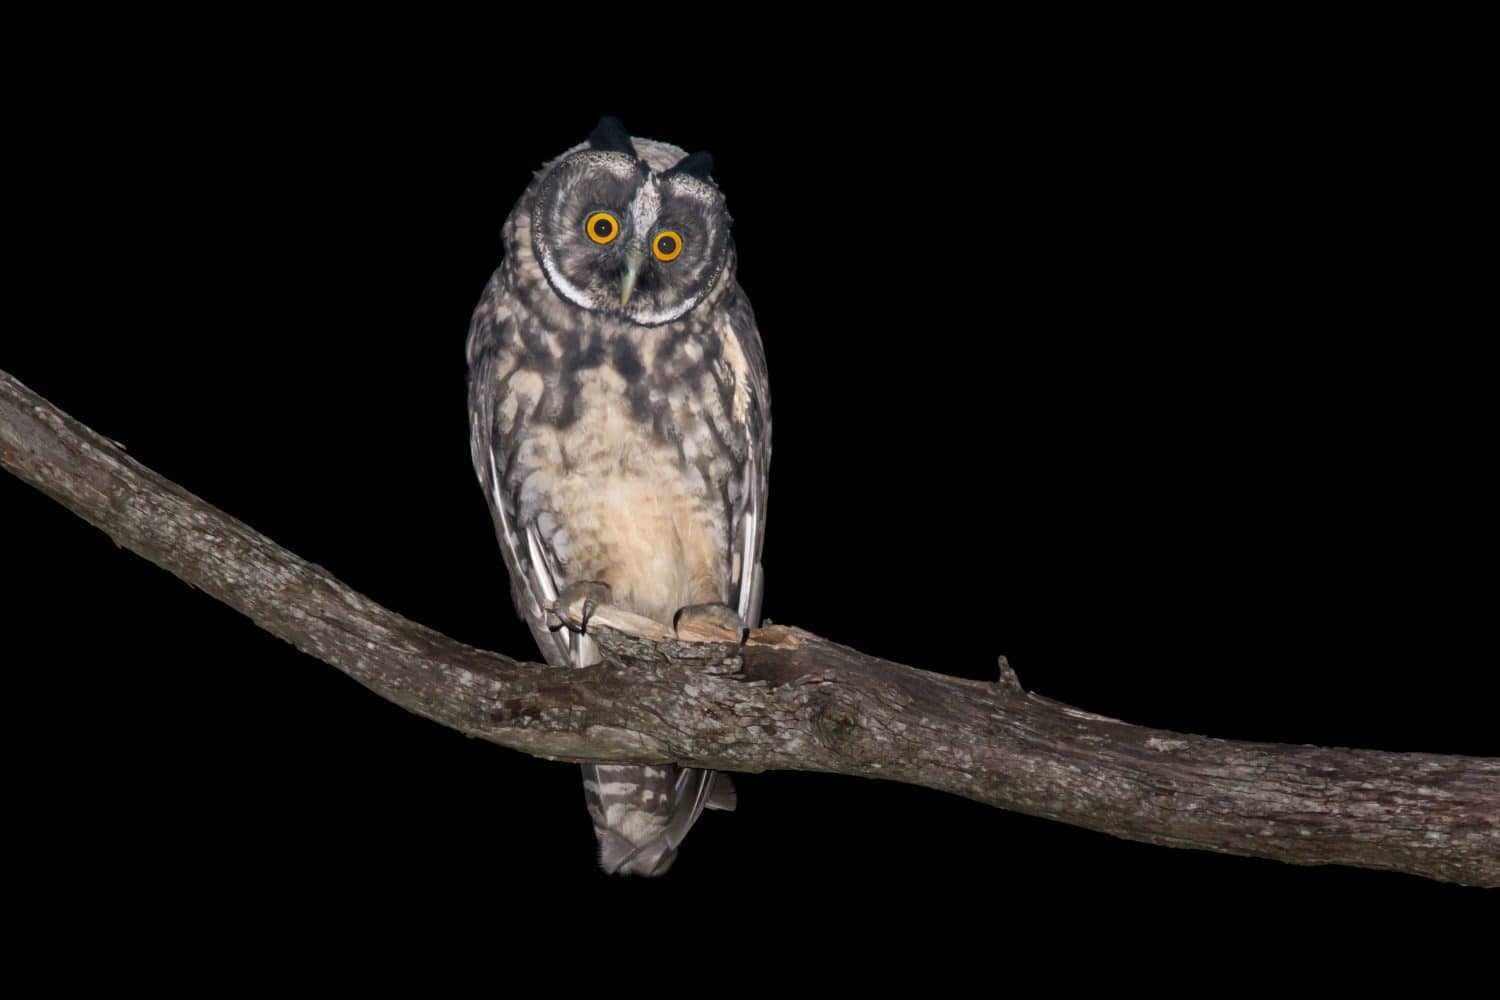 Stygian Owl (Asio stygius) during the night.